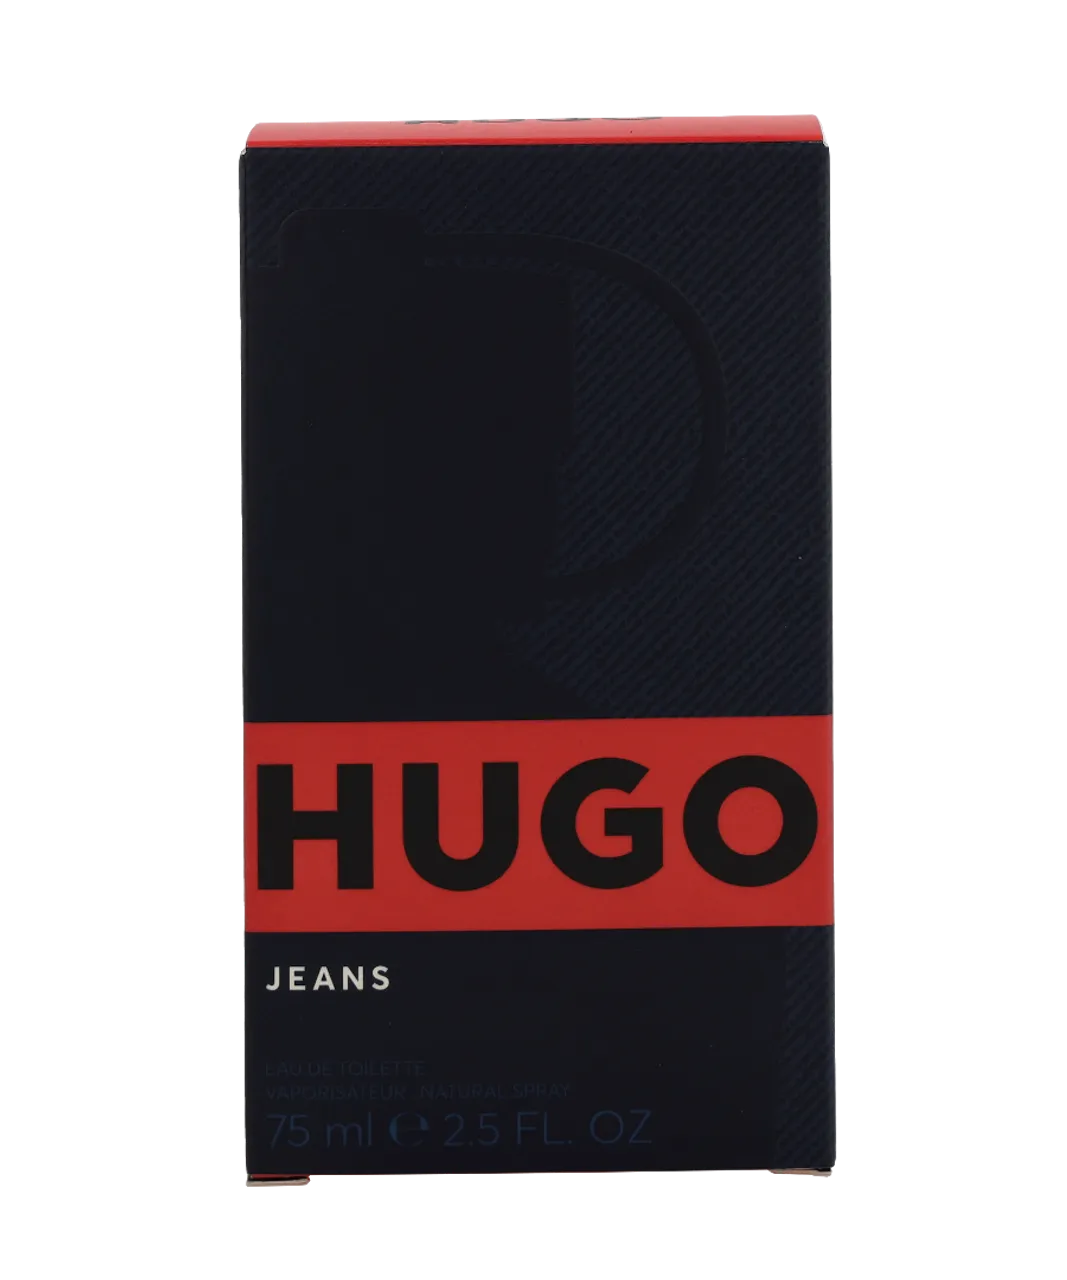 Hugo Boss Mens Jeans Eau de Toilette 75ml - One Size